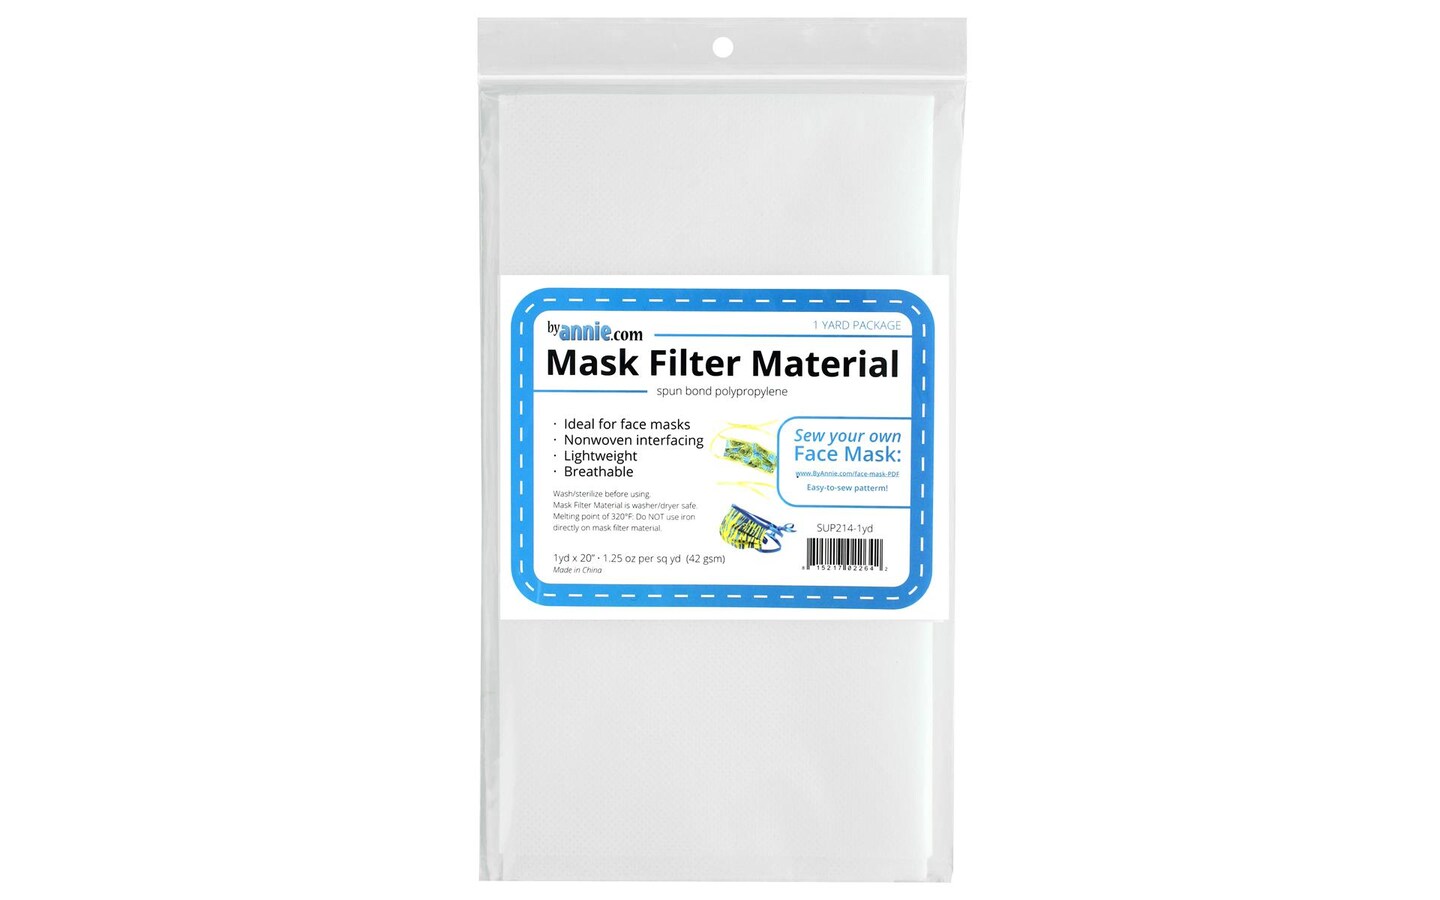 Mask Filter Material